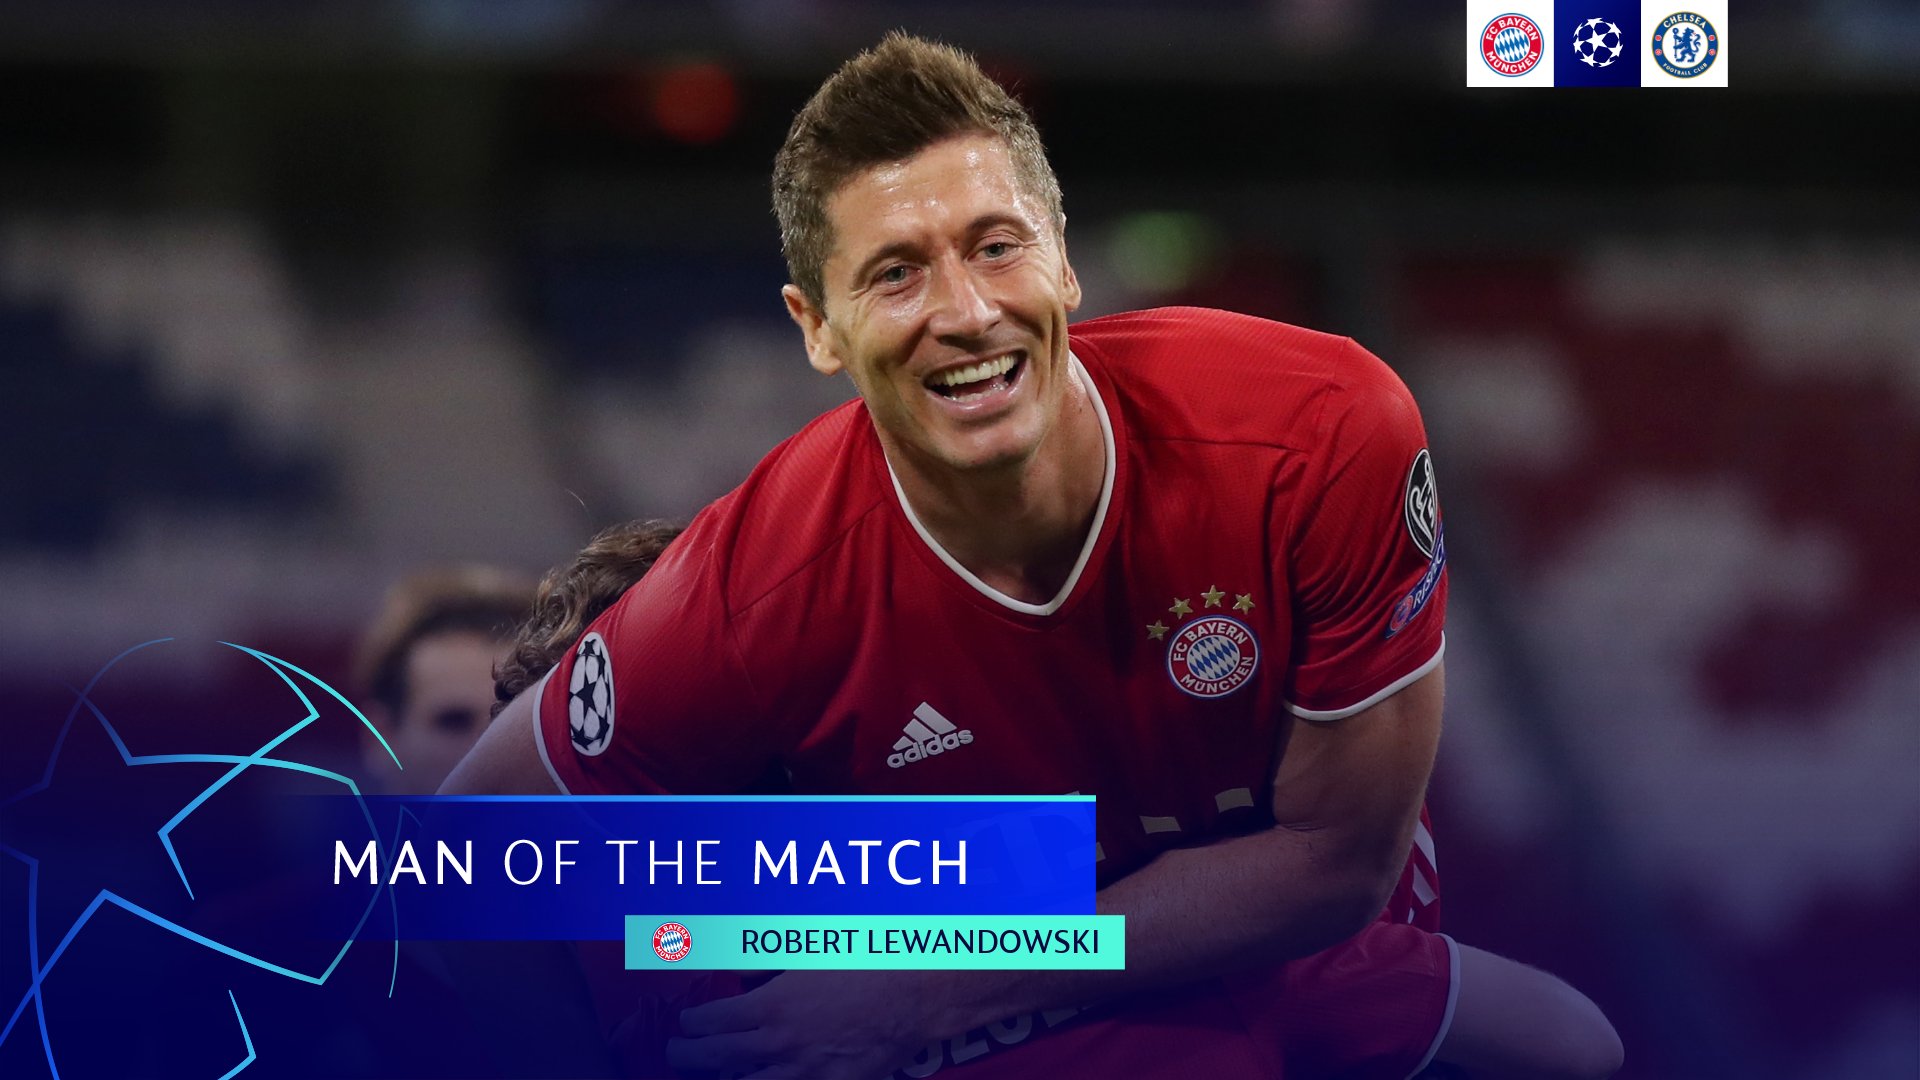 بایرن مونیخ - Bayern Munich - لیگ قهرمانان اروپا - UCL - بهترین بازیکن زمین